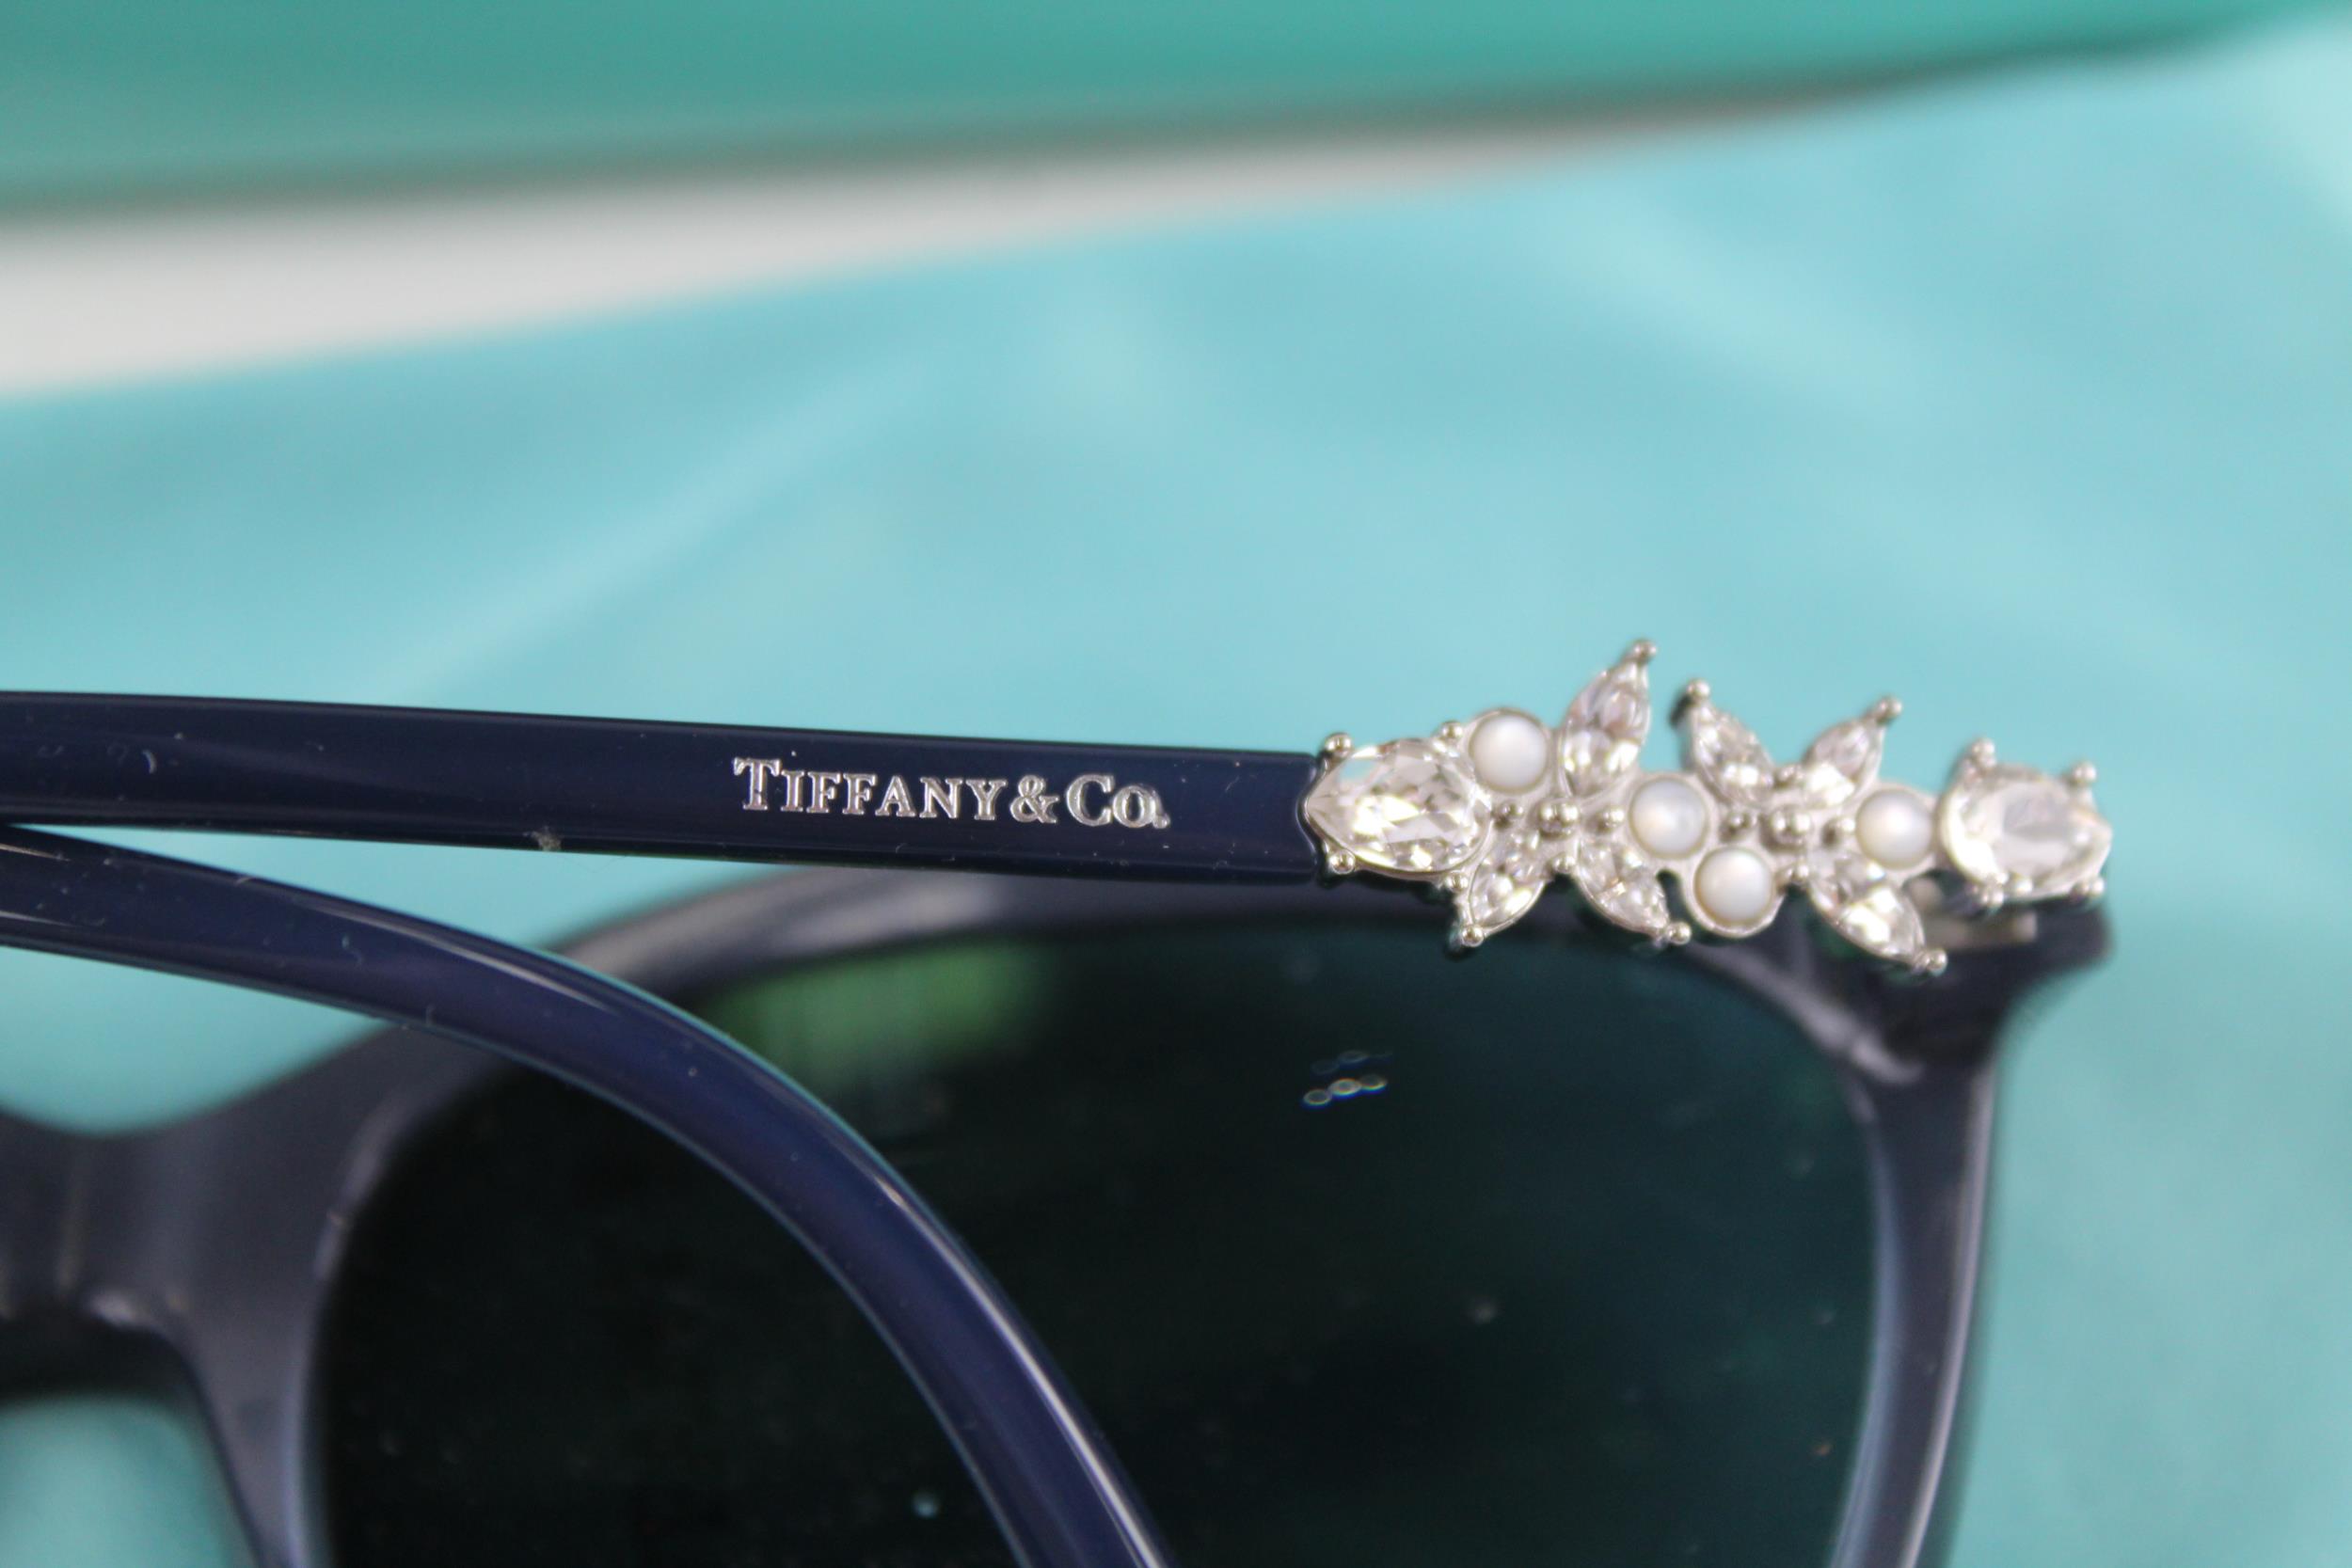 4 x Designer Prescription Glasses Inc Cased, Tiffany & Co, Chanel Etc - Items are in previously - Image 6 of 6